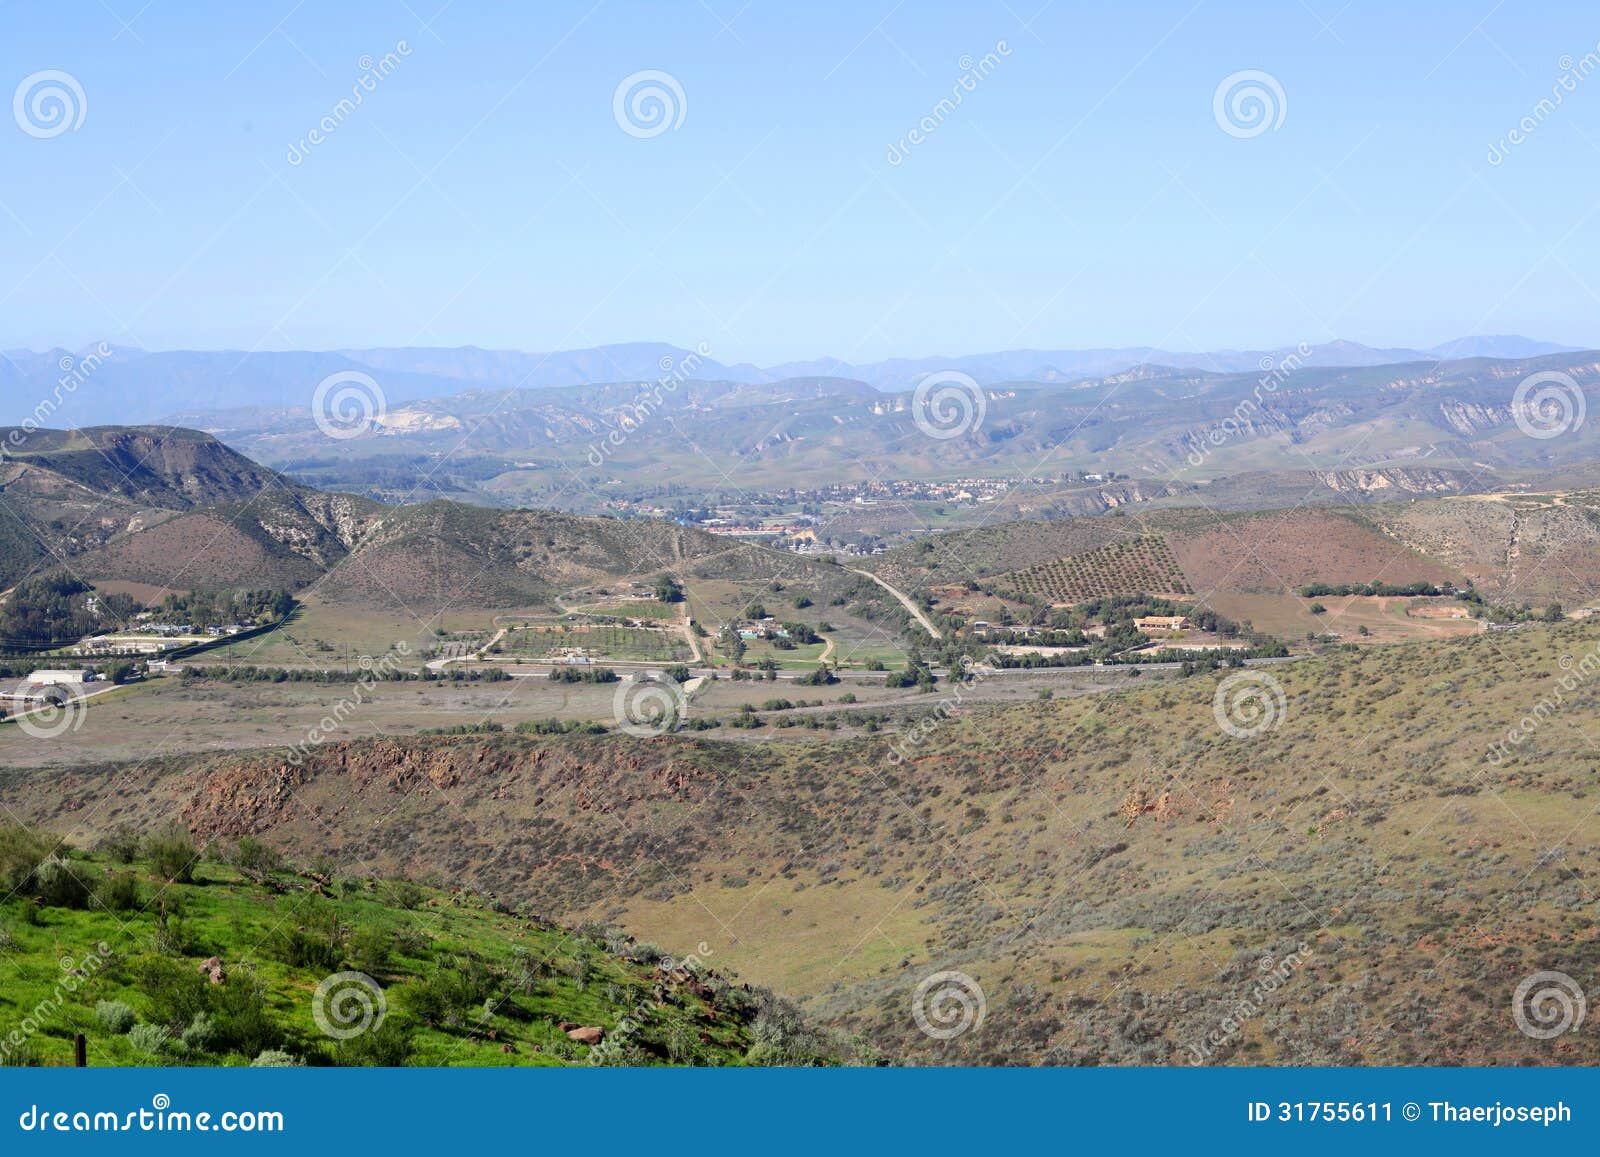 Simi Valley Landscape Stock Image - Image: 31755611